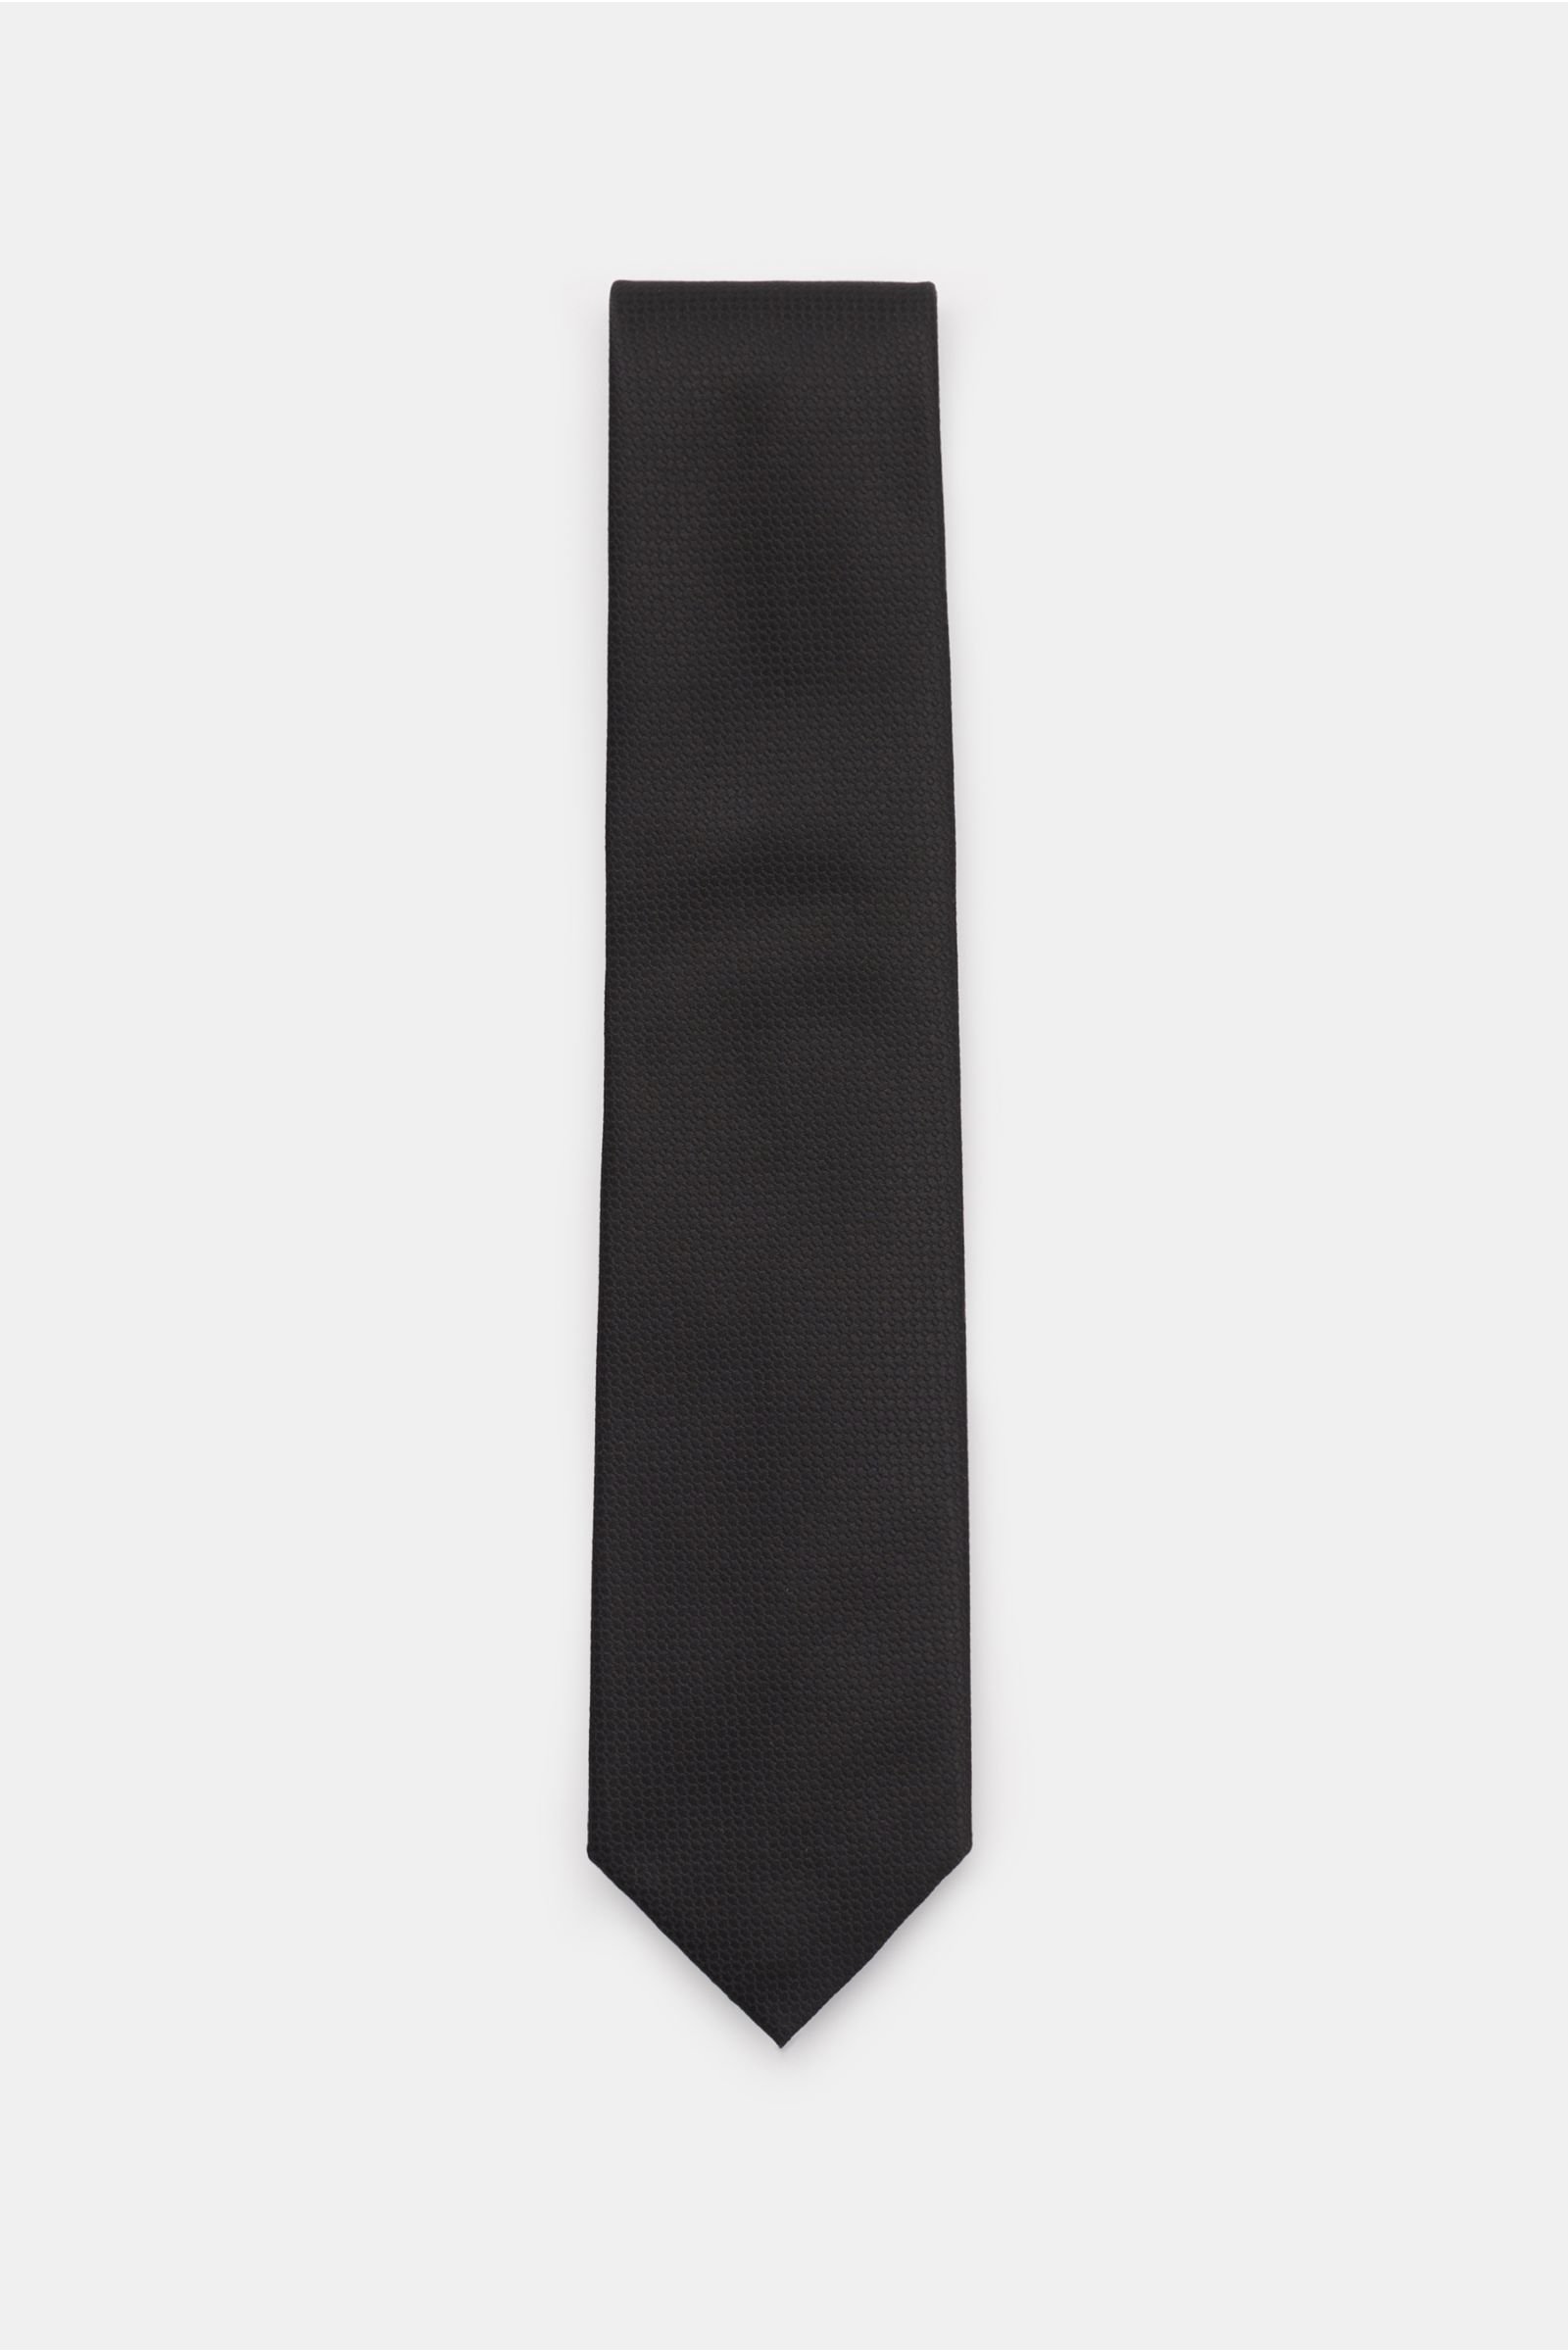 Silk tie black